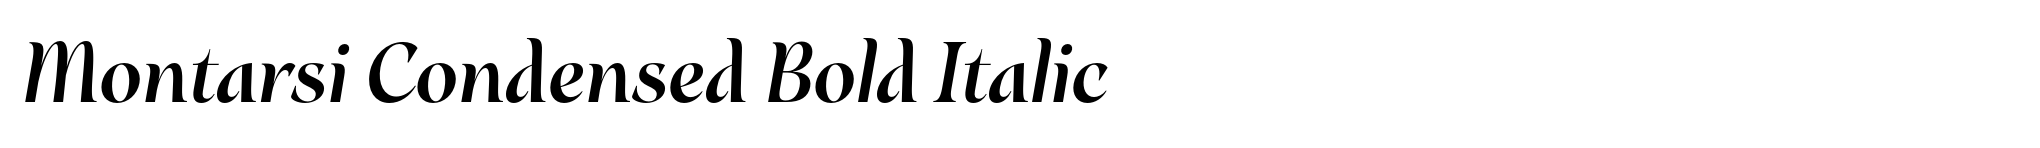 Montarsi Condensed Bold Italic image